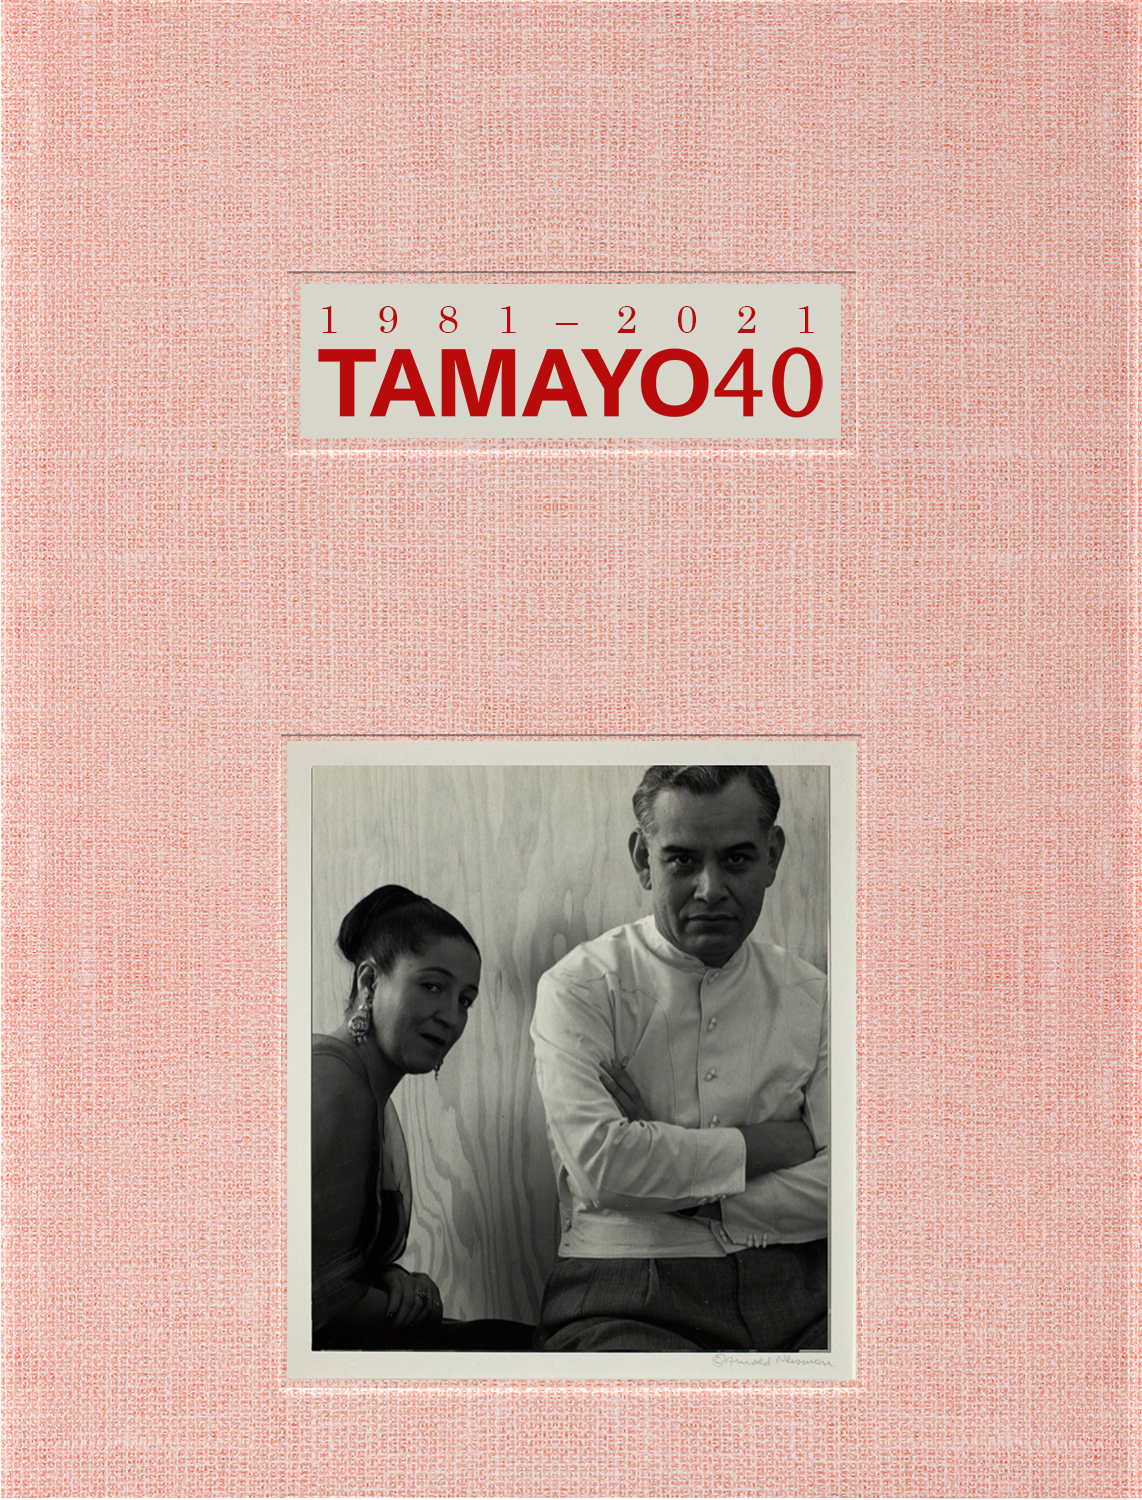 Tamayo 40